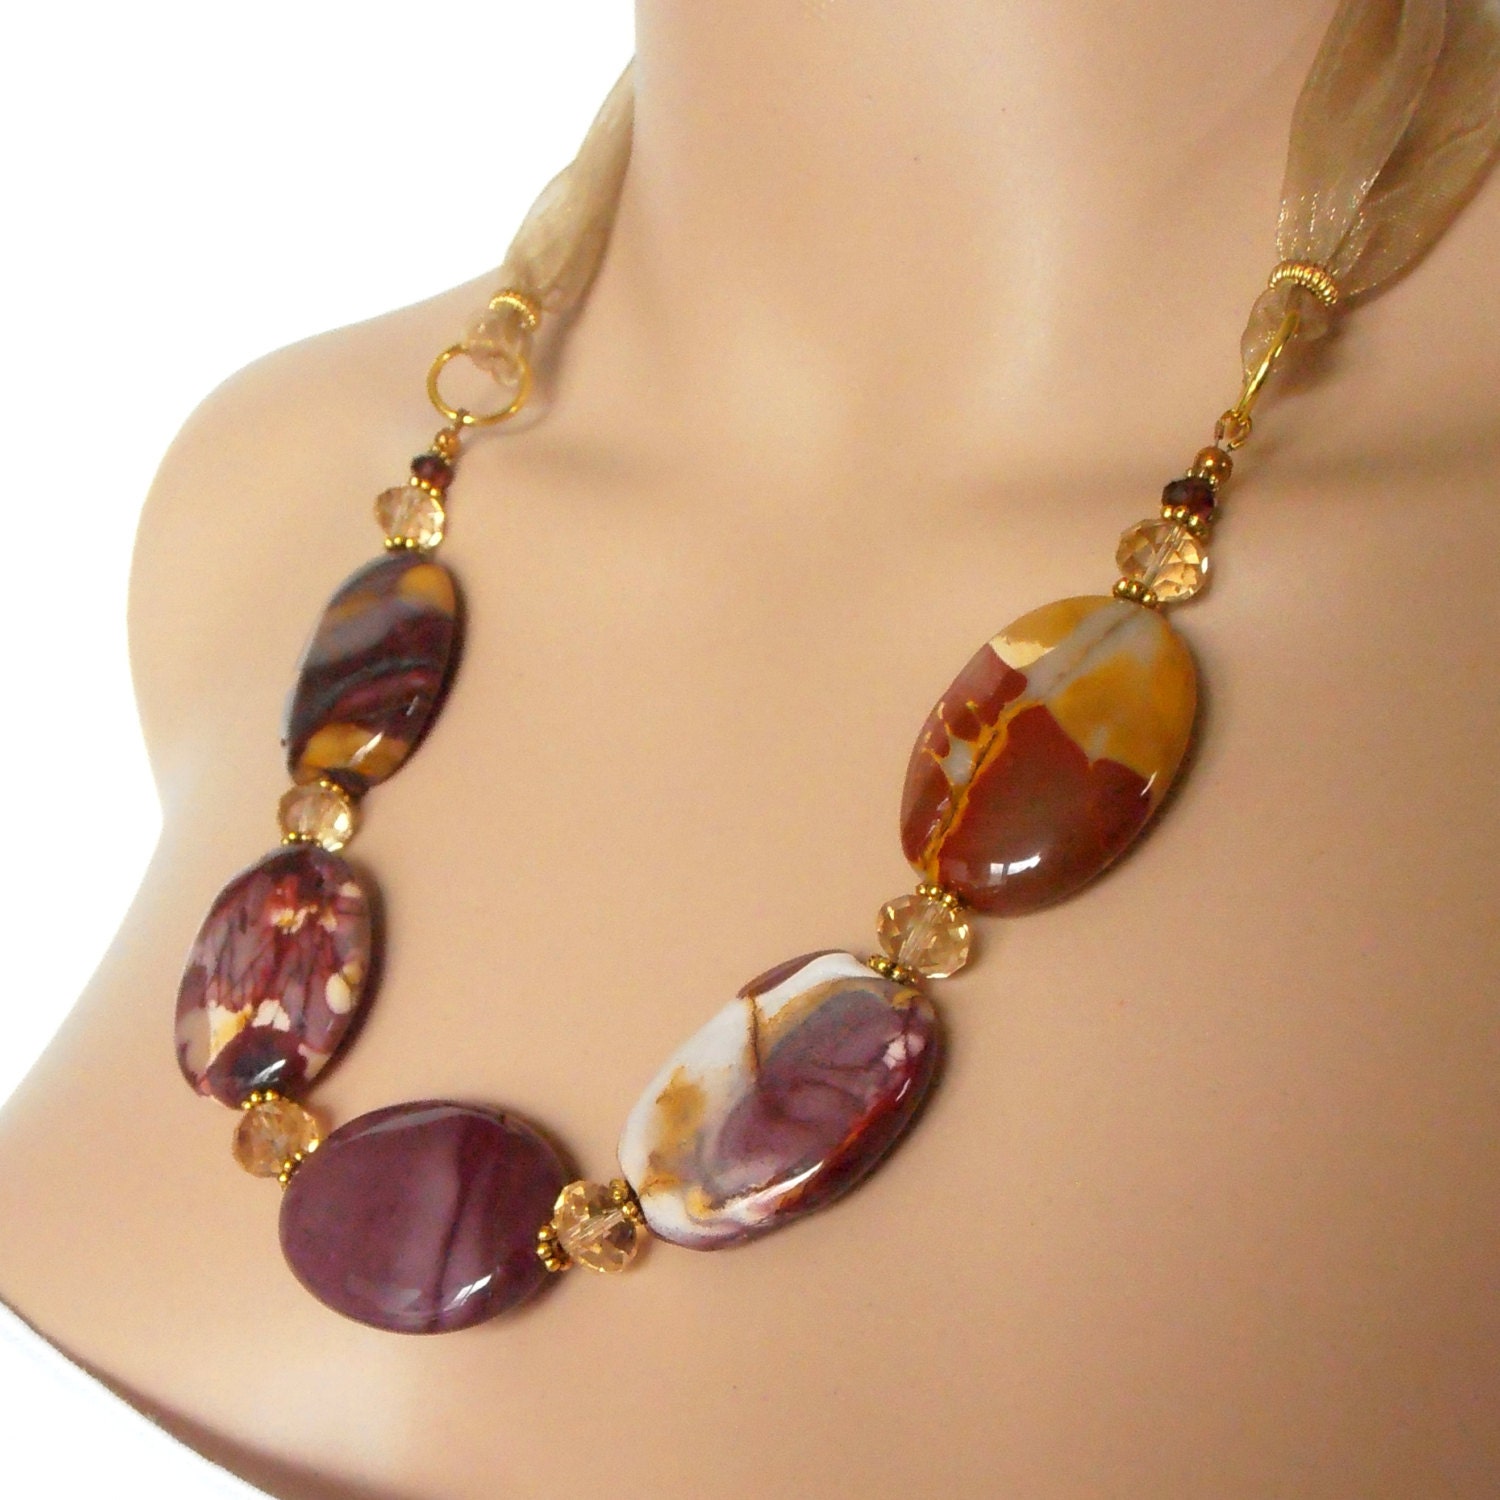 Long bead necklace ideas